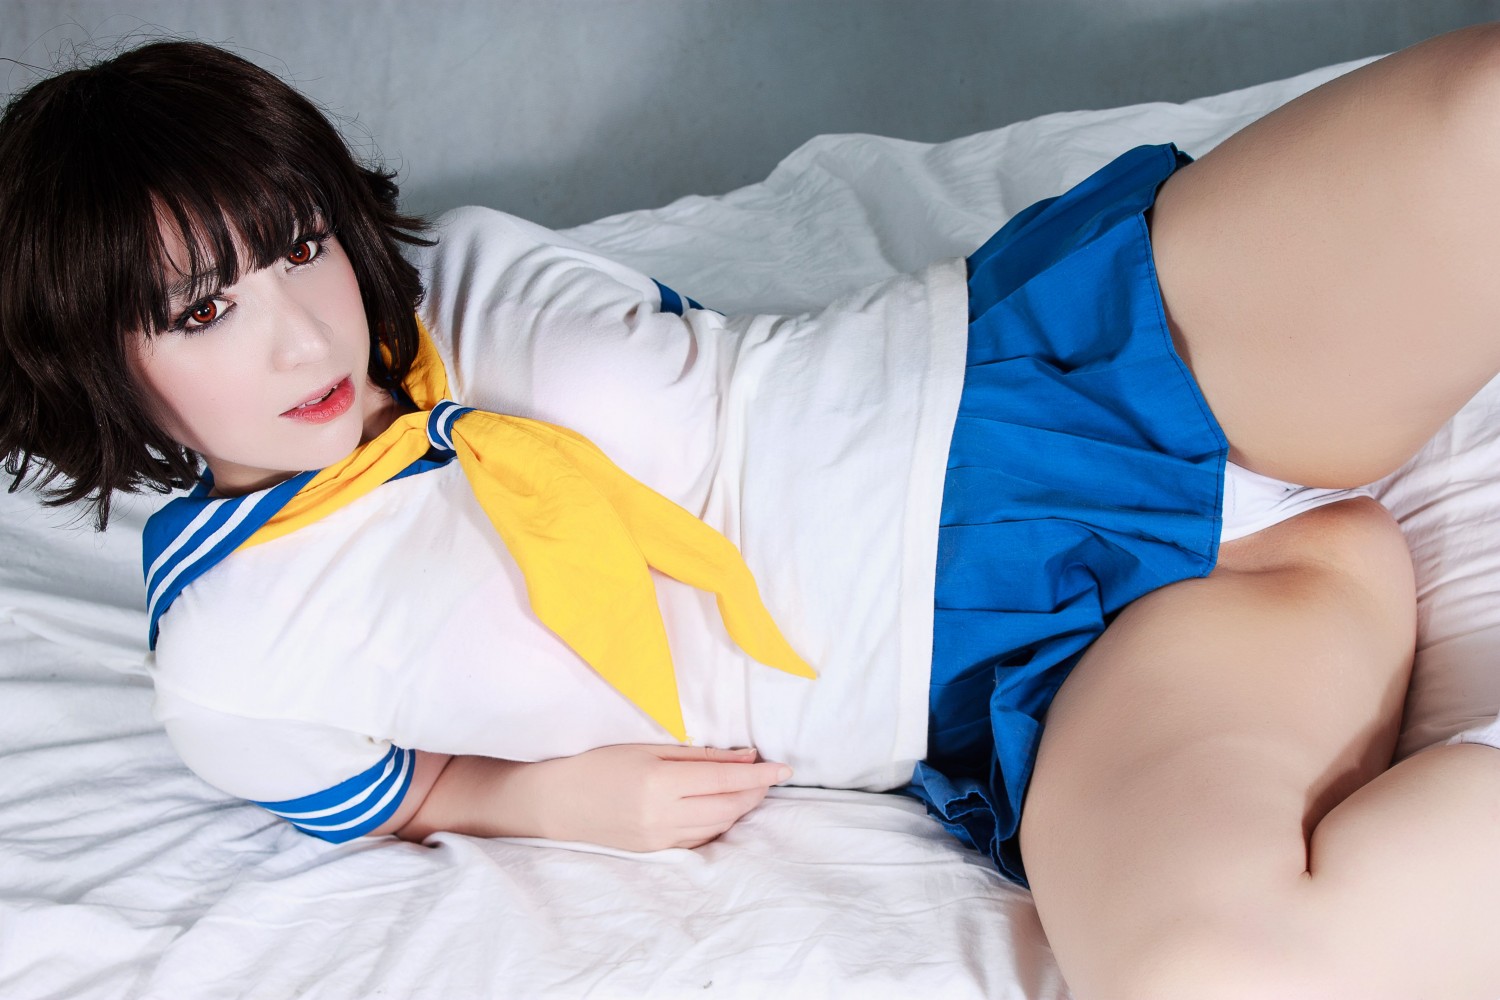 Kitty Honey - Sailor Uniform Cosplay